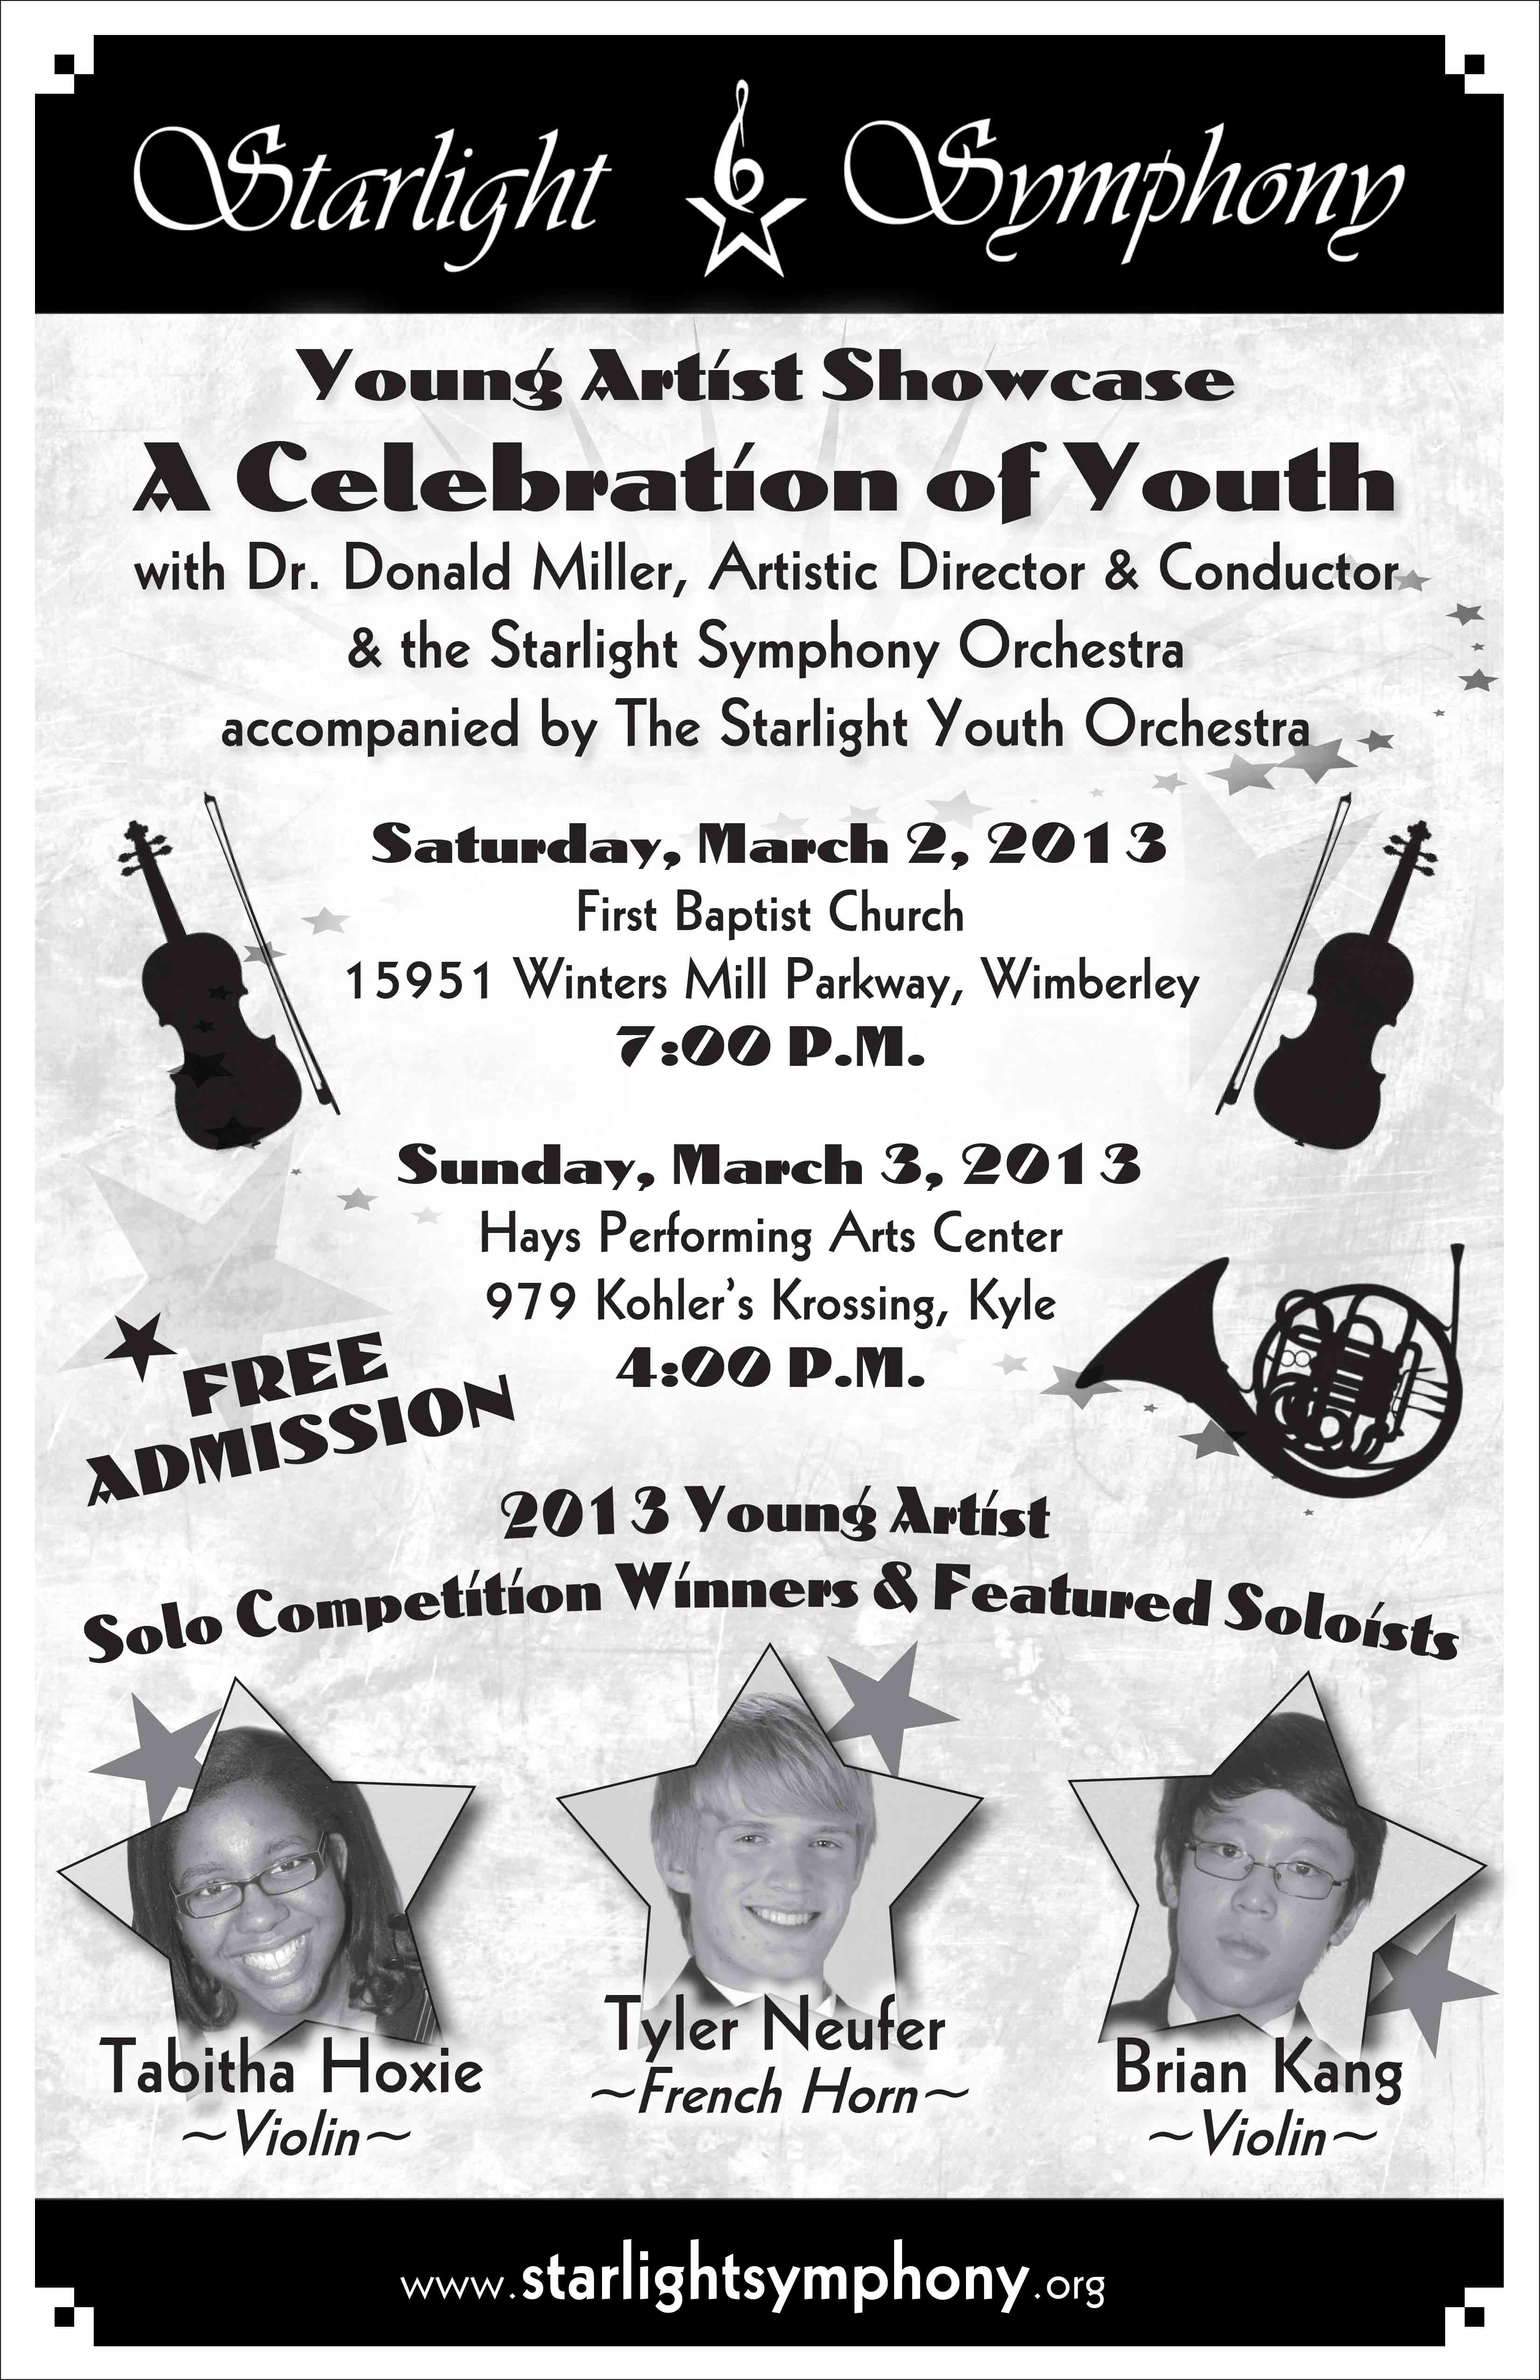 Starlight Symphony Young Artist Showcase